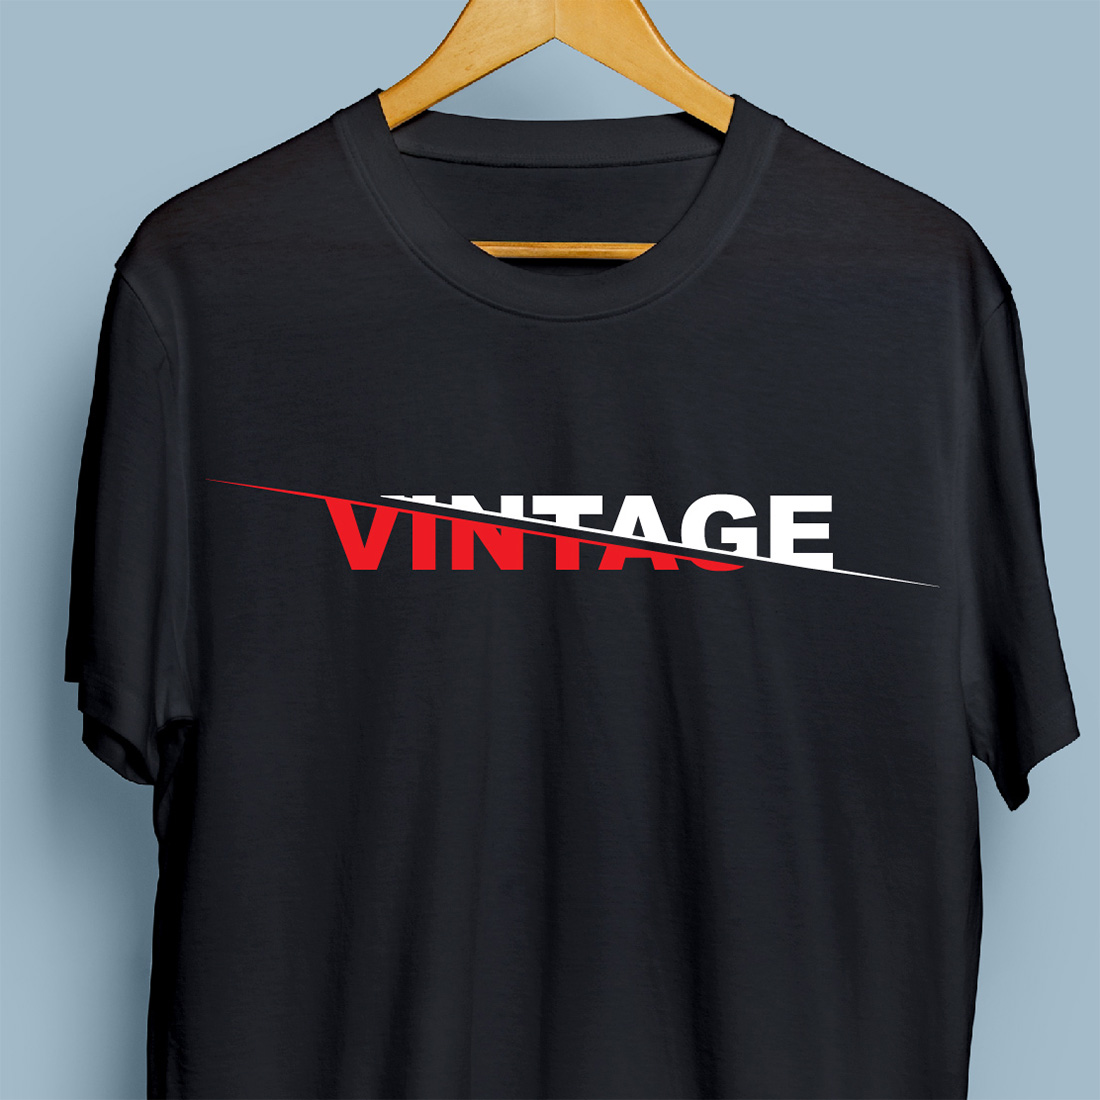 Vintage t shirt design preview image.